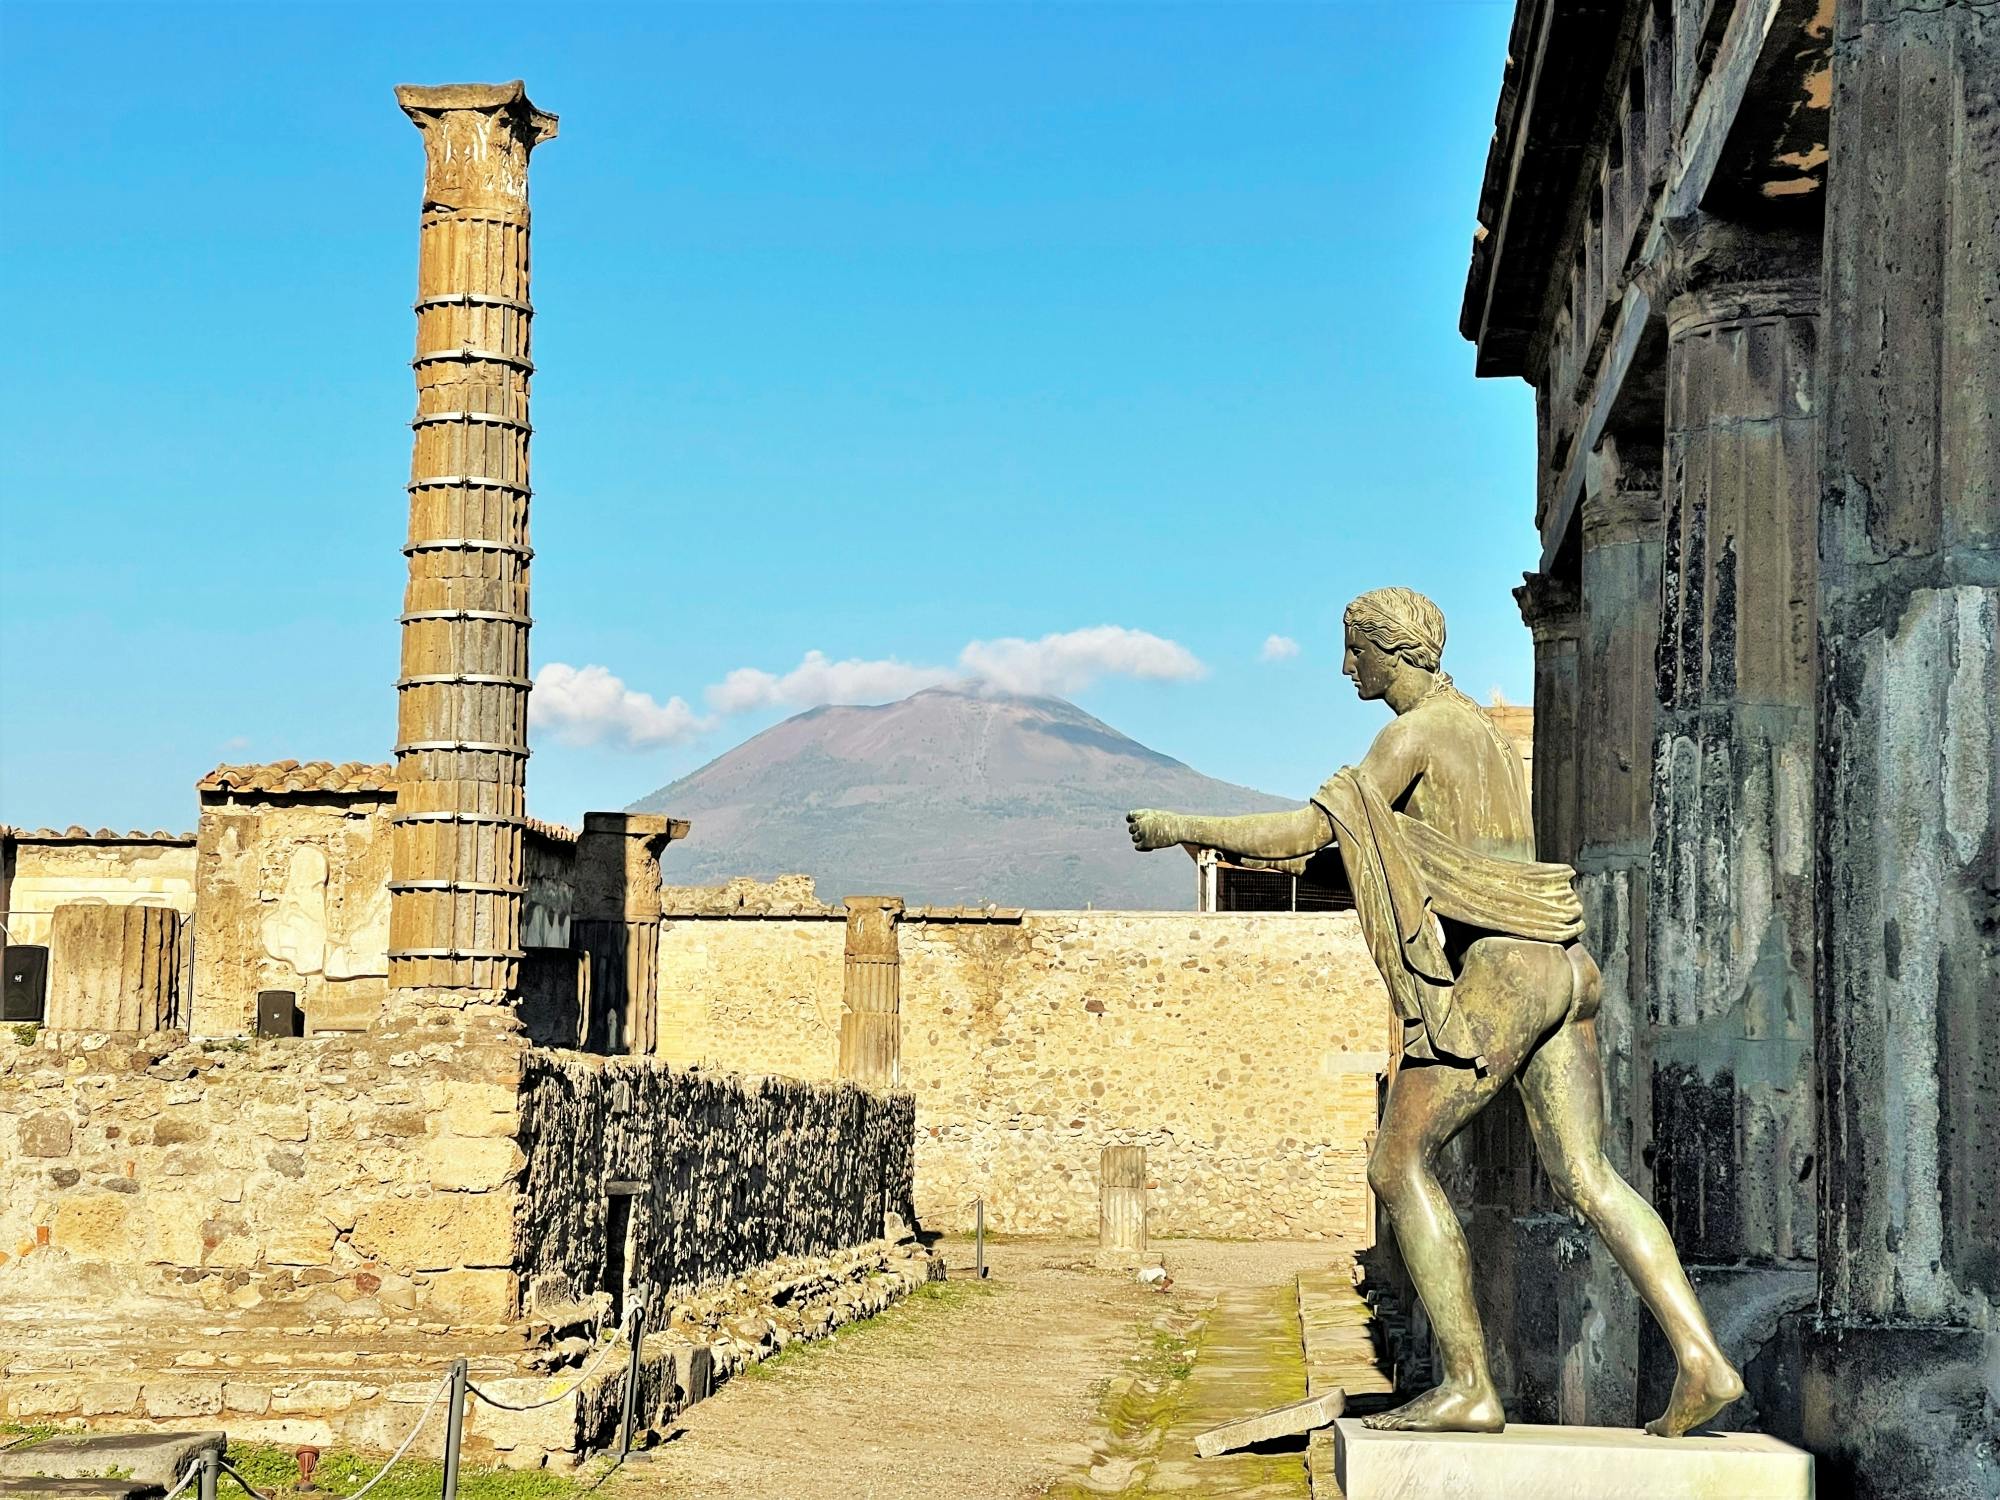 Pompeii small-group tour from the Forum to Via dell'Abbondanza